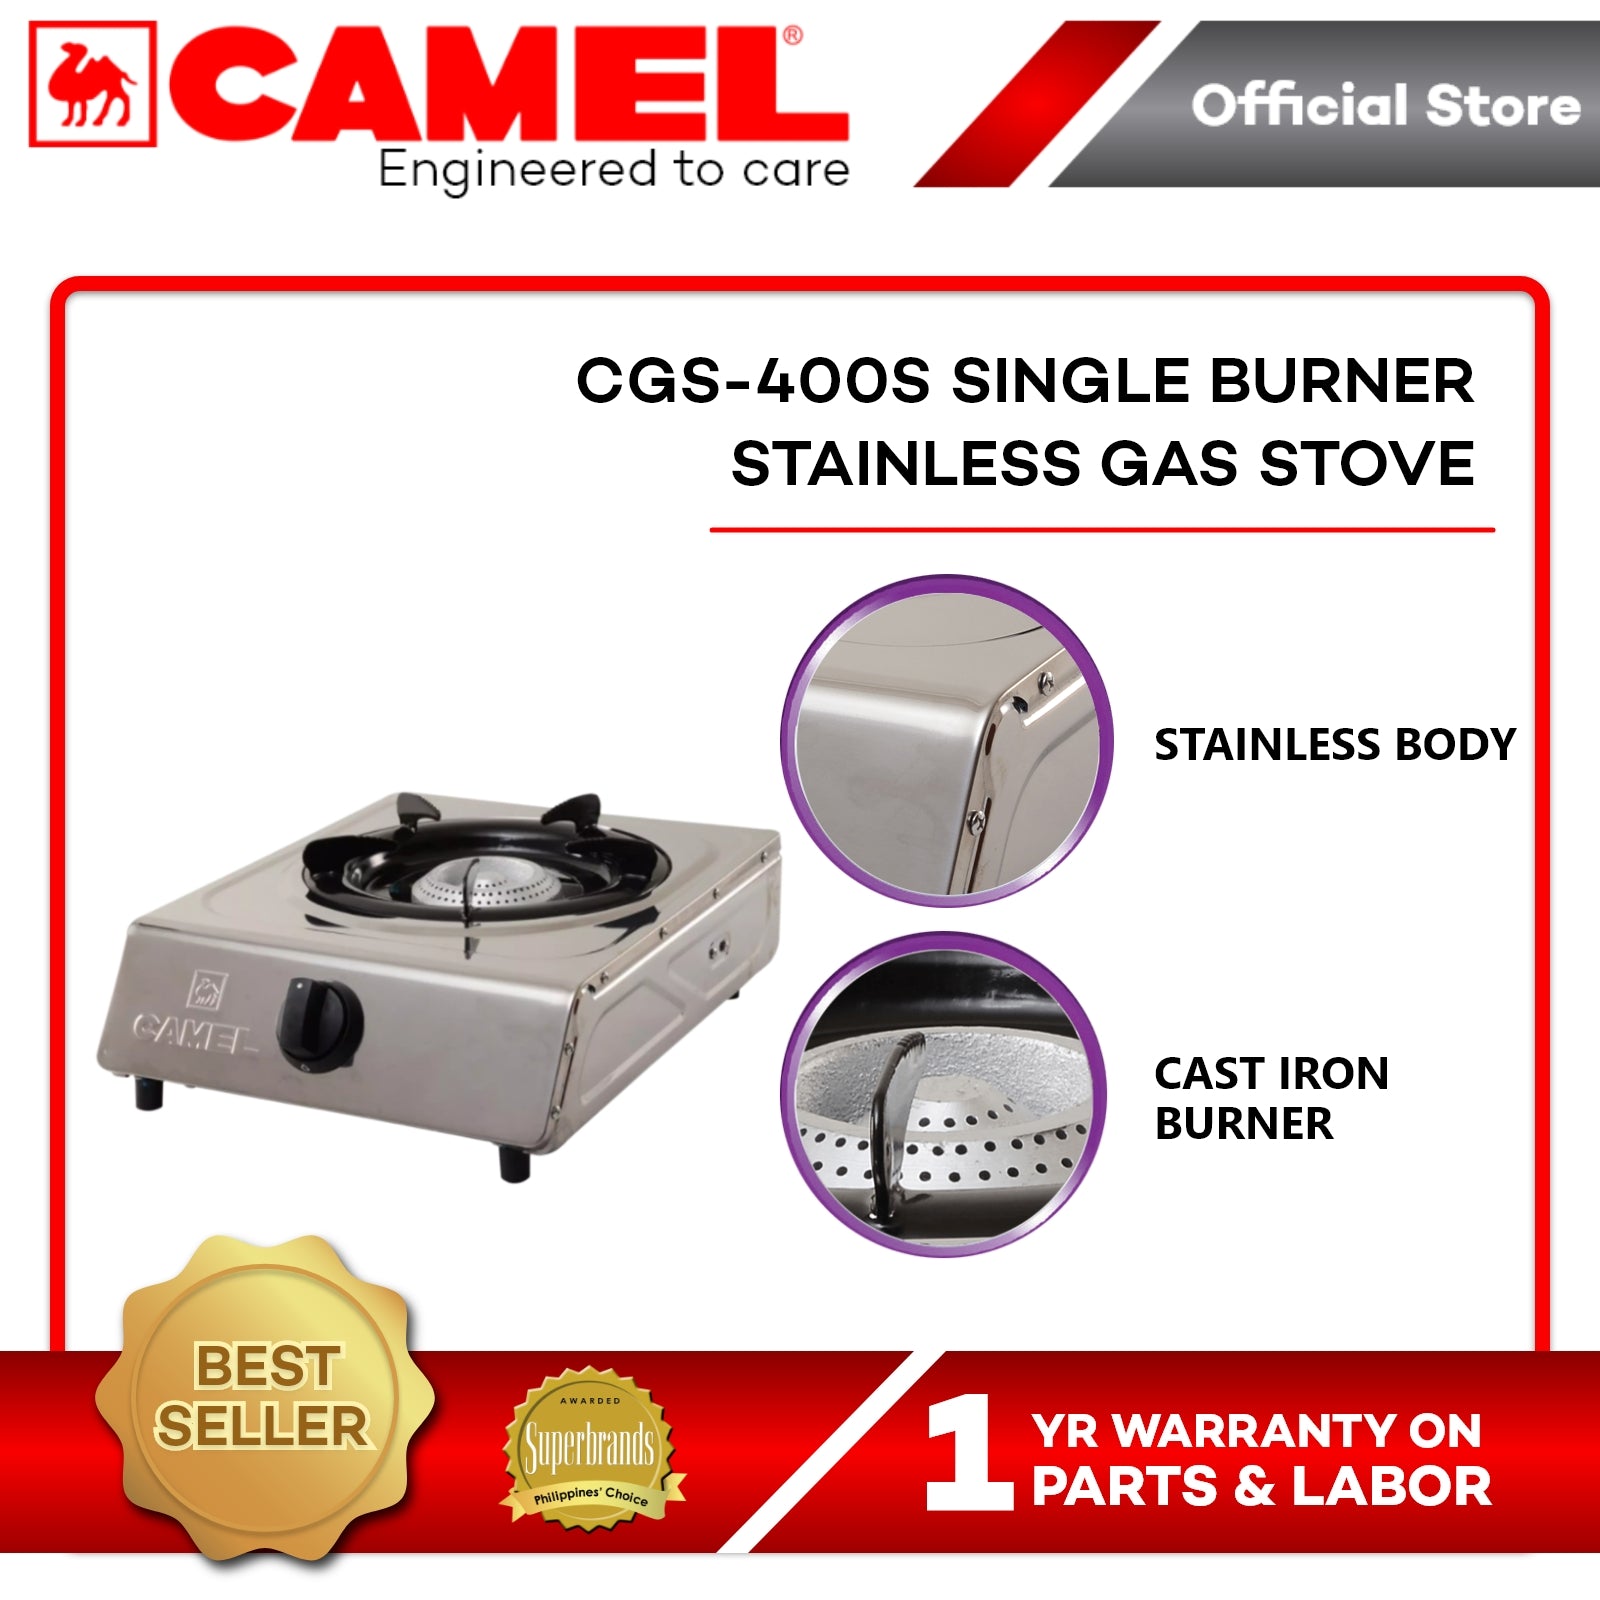 CAMEL CGS-400S Gas Stove Camel